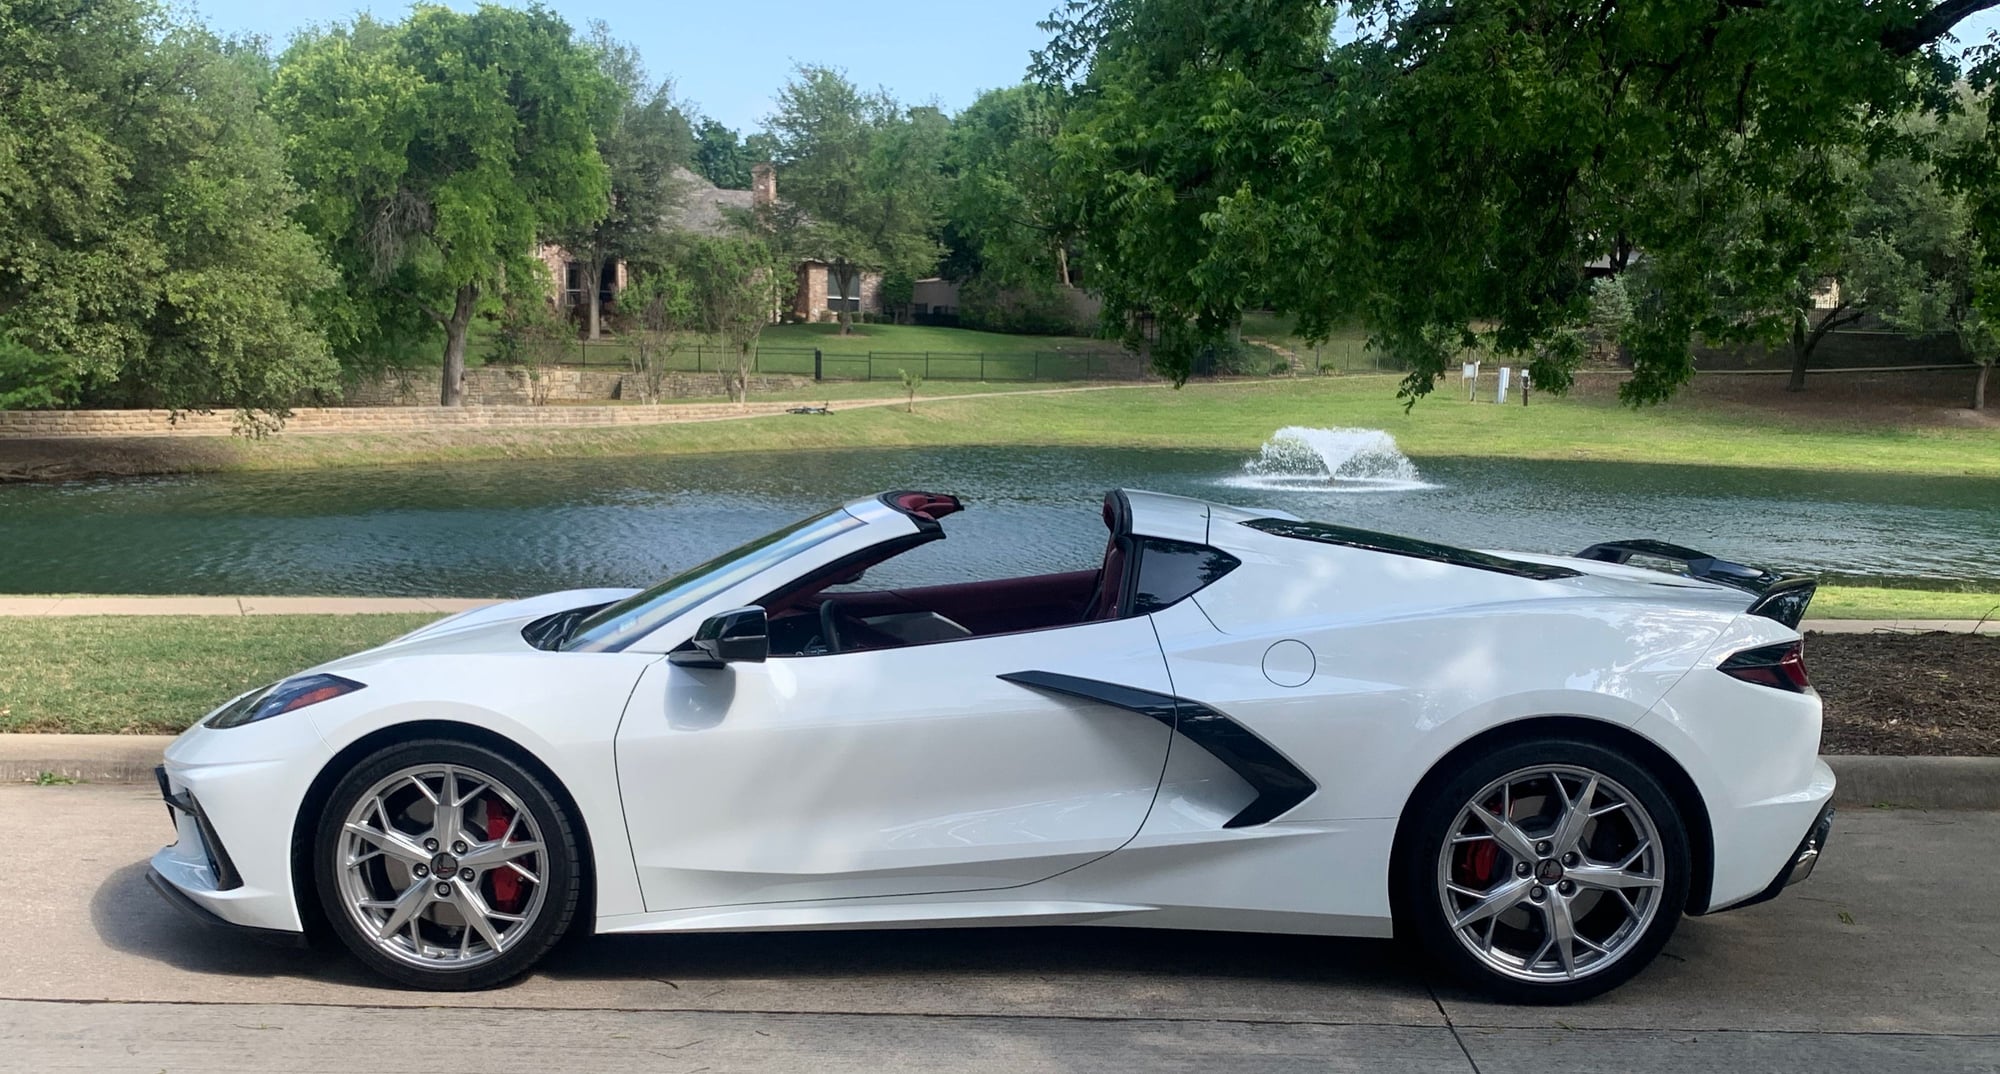 C8 for sale. Dallas Texas - CorvetteForum - Chevrolet Corvette Forum